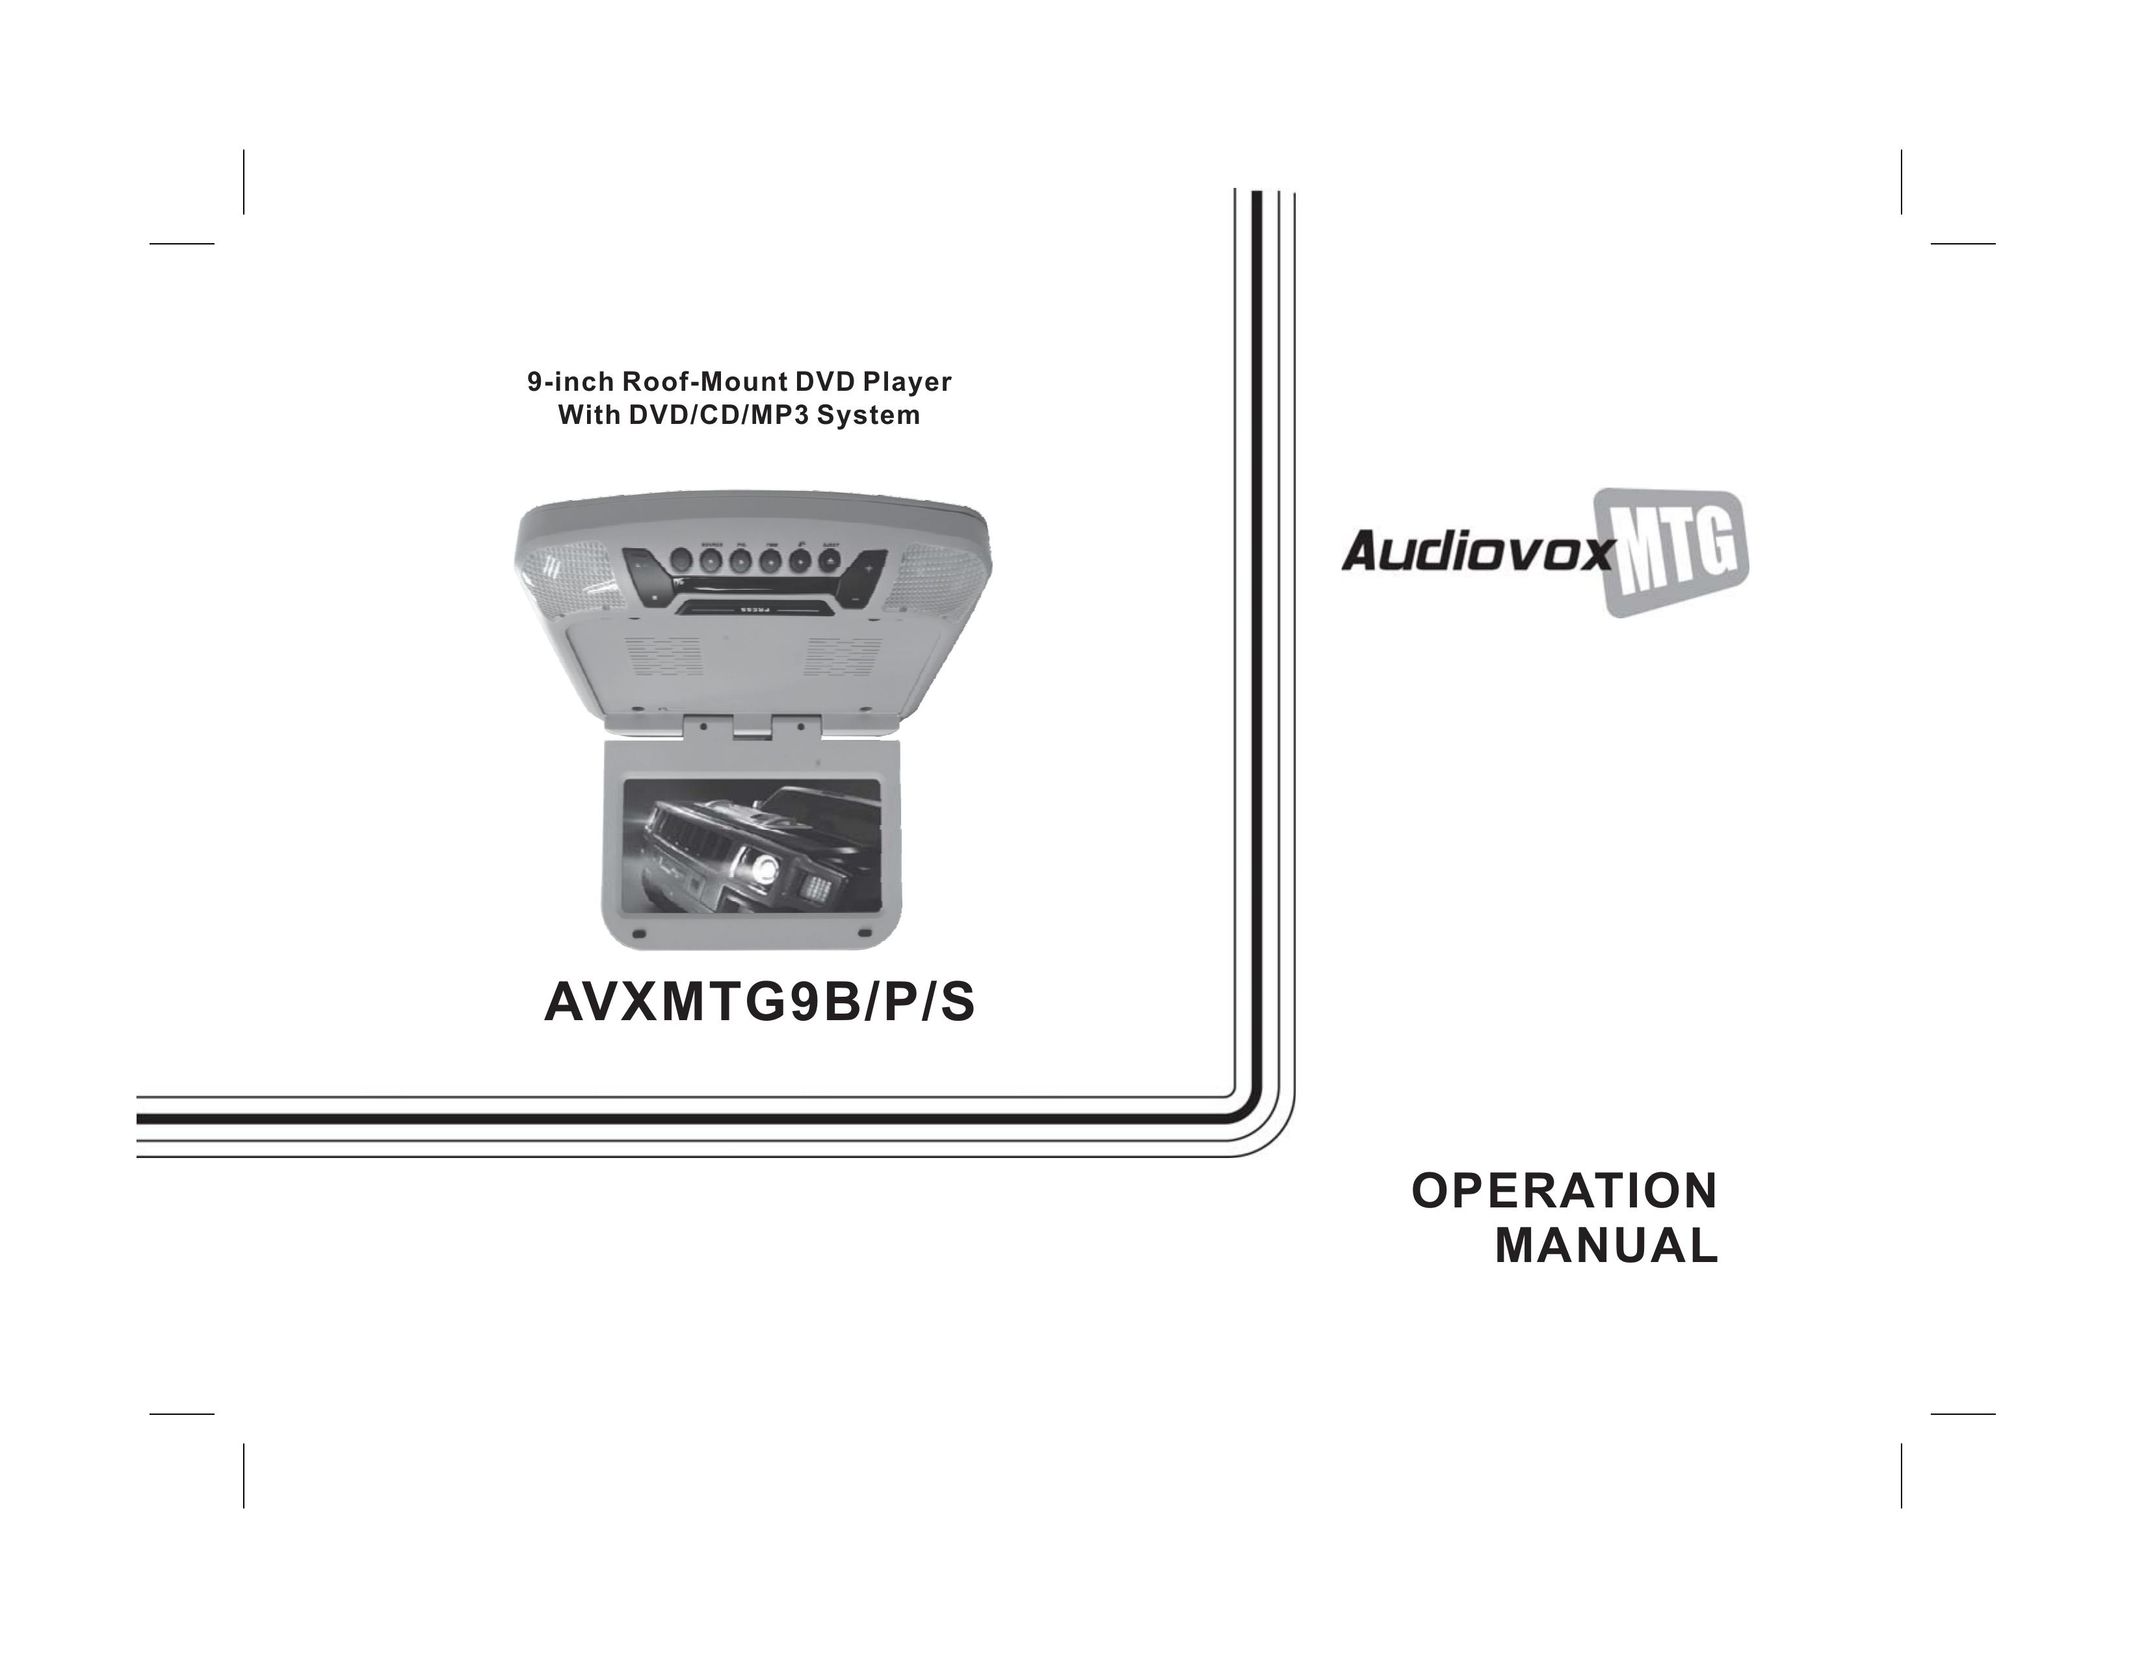 Audiovox AVXMTG9B/P/S DVD Player User Manual